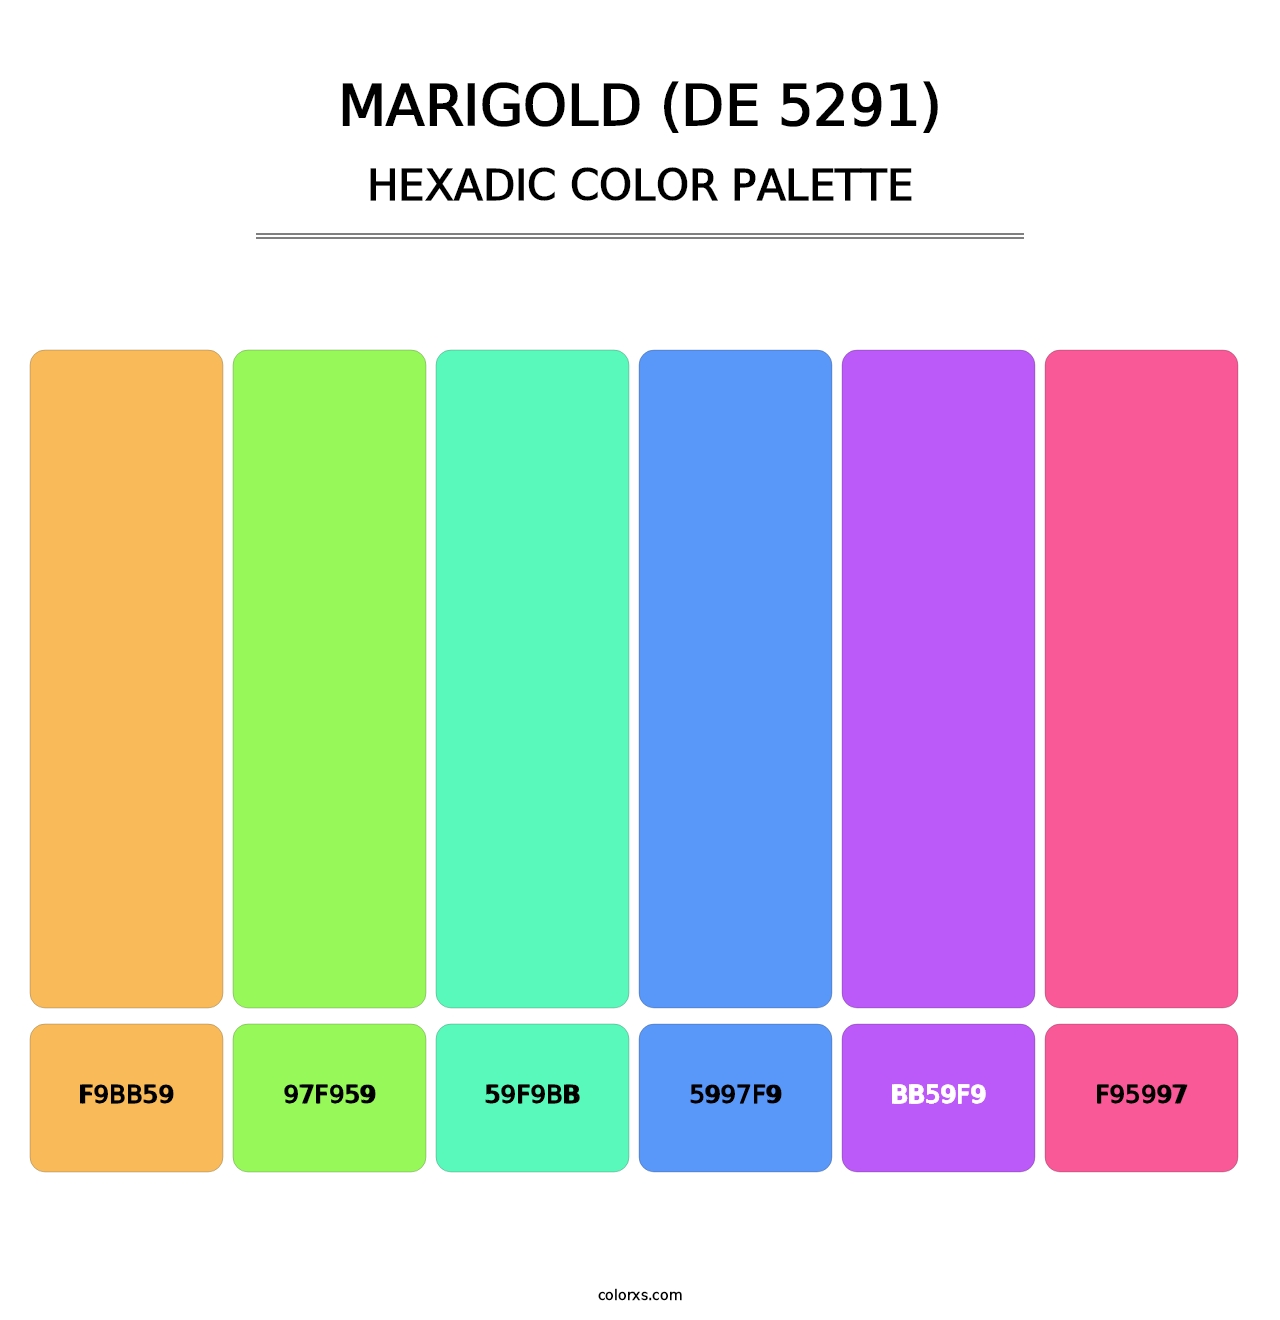 Marigold (DE 5291) - Hexadic Color Palette